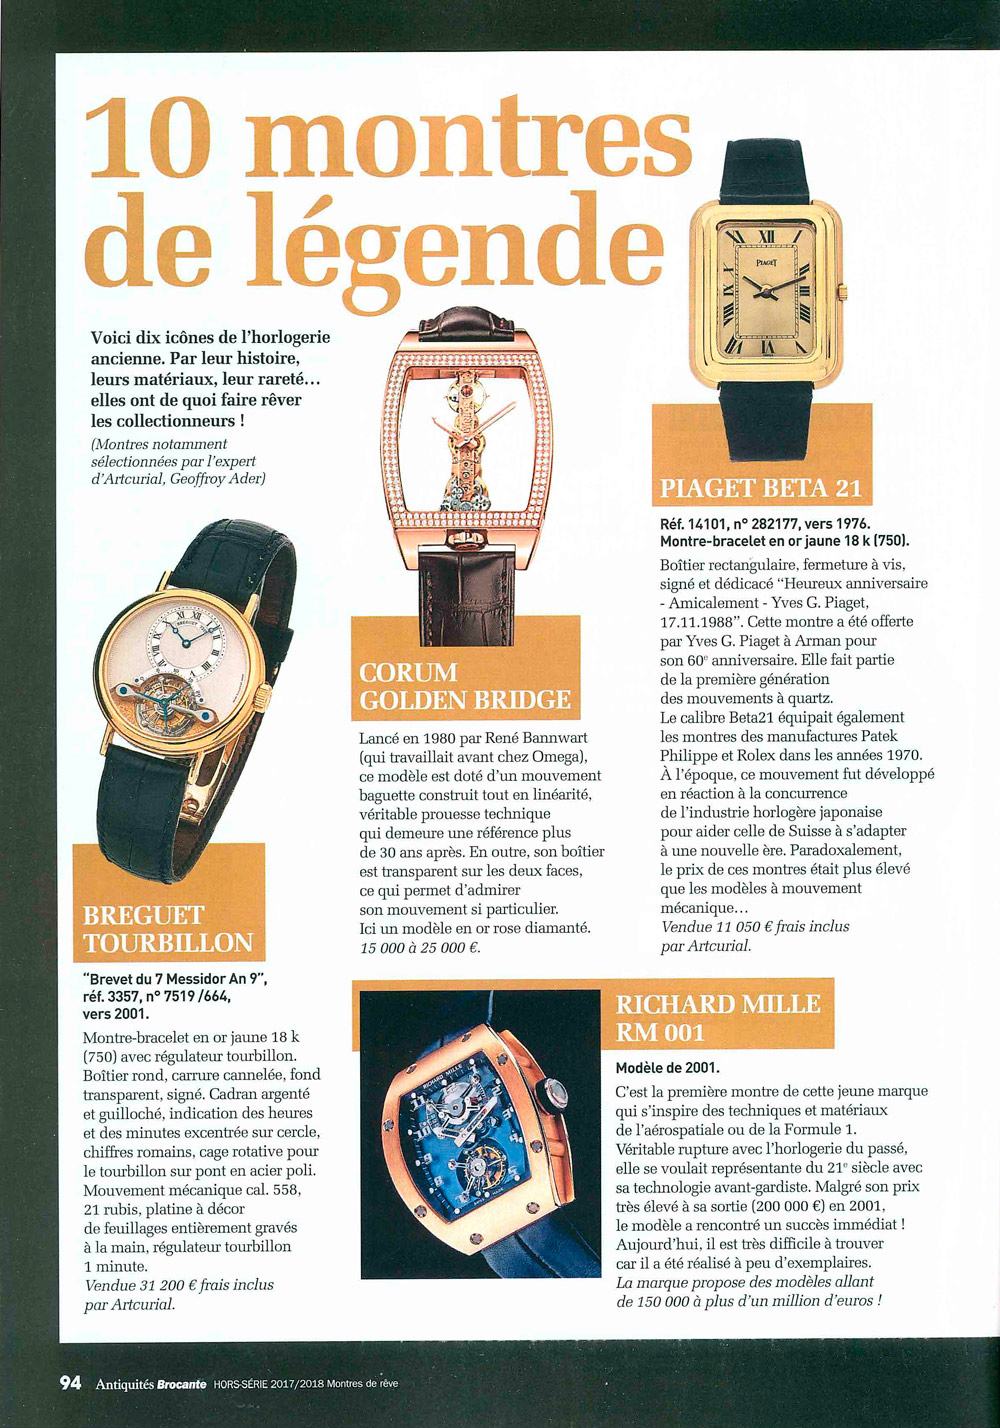 antiquites-brocante-article-presse-aderwatches-expert-montres-luxe-horlogerie